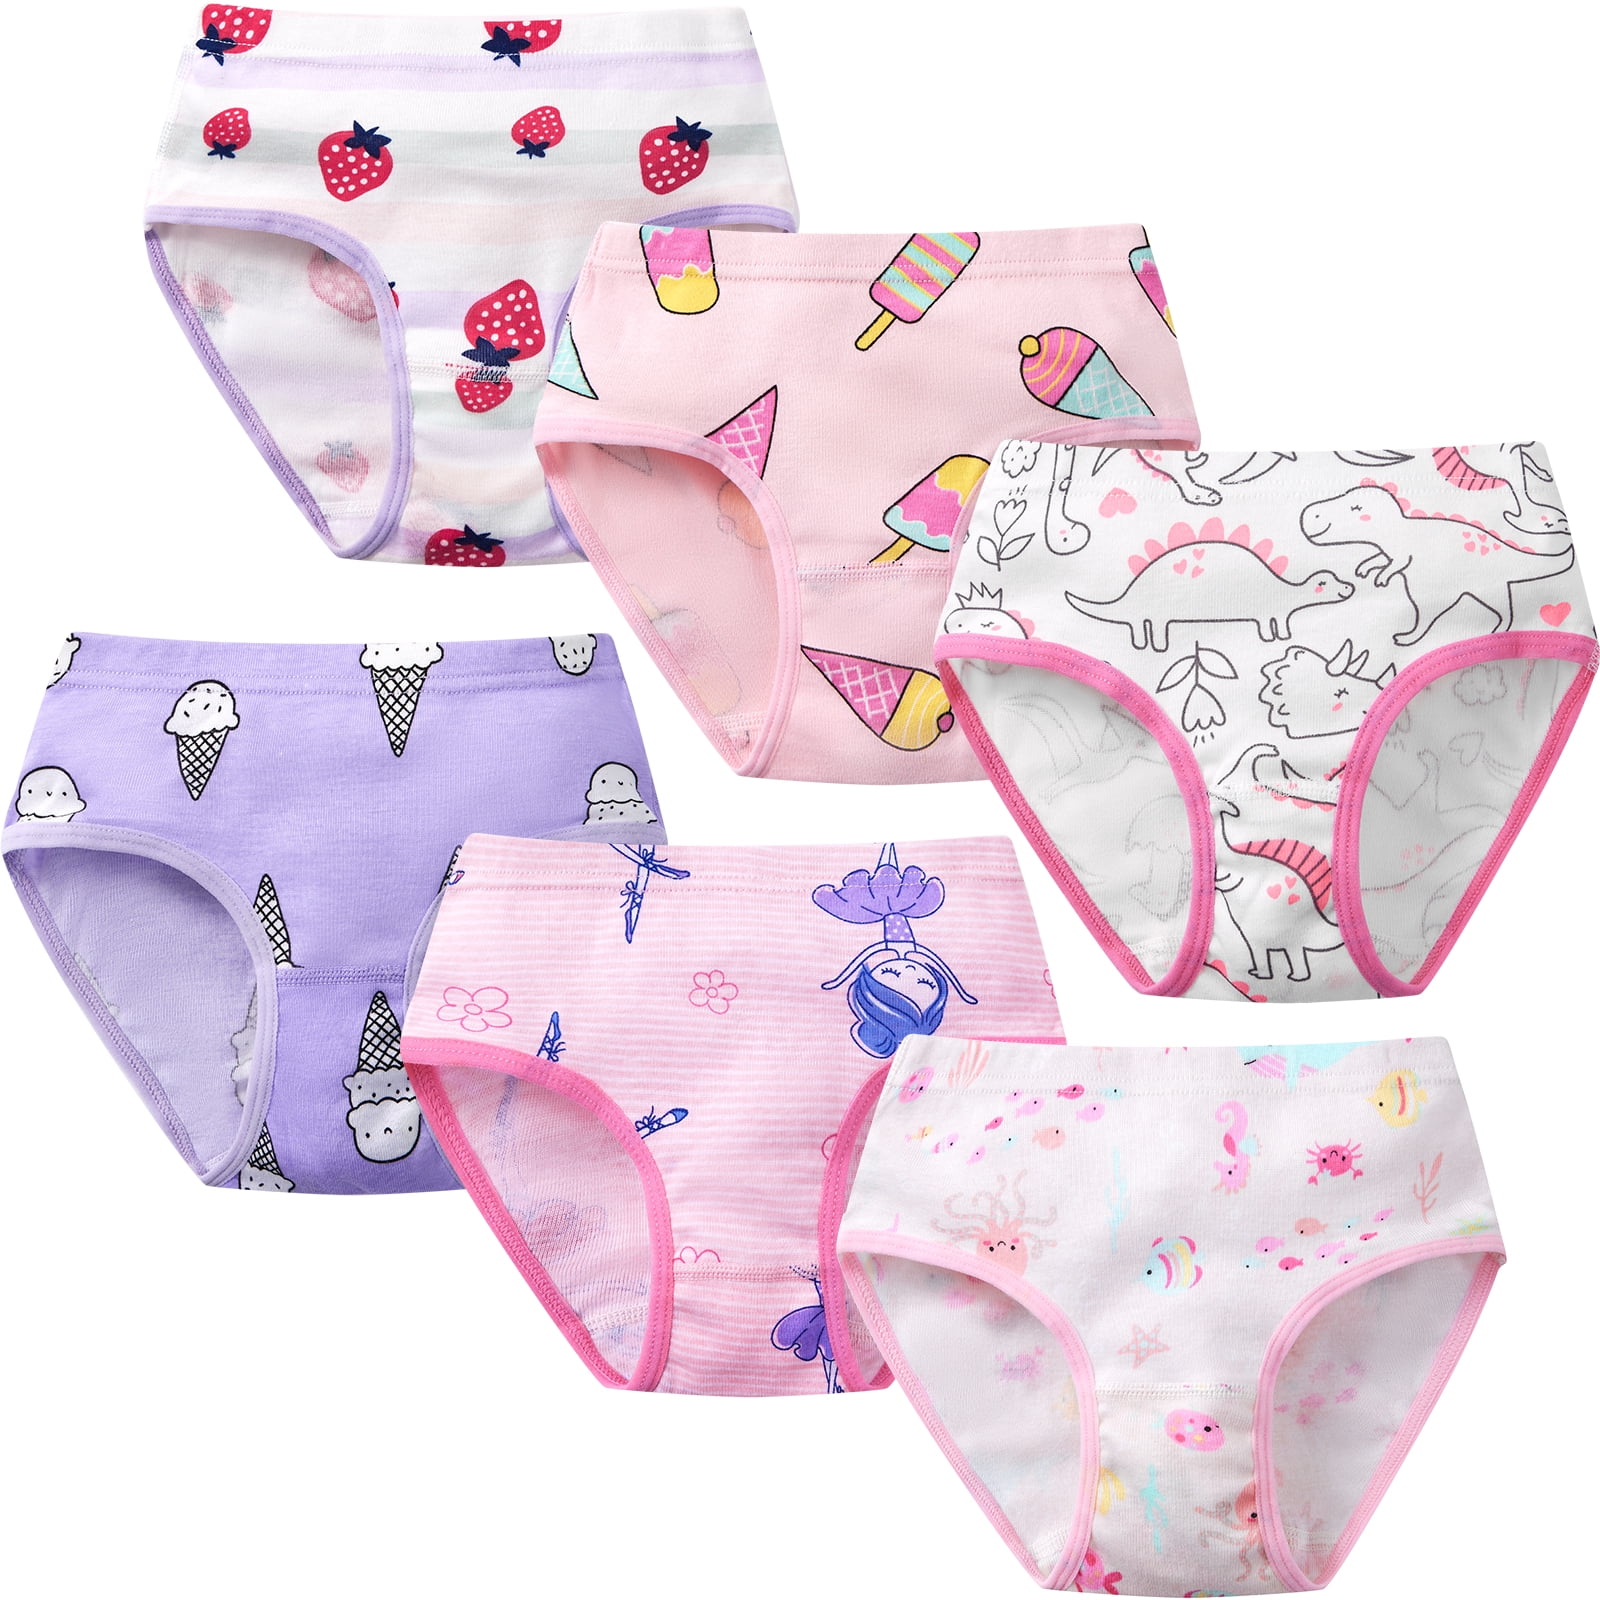 Newborn baby boys & baby girls pure soft cotton panties pack of 6 pcs. -  FAVISM